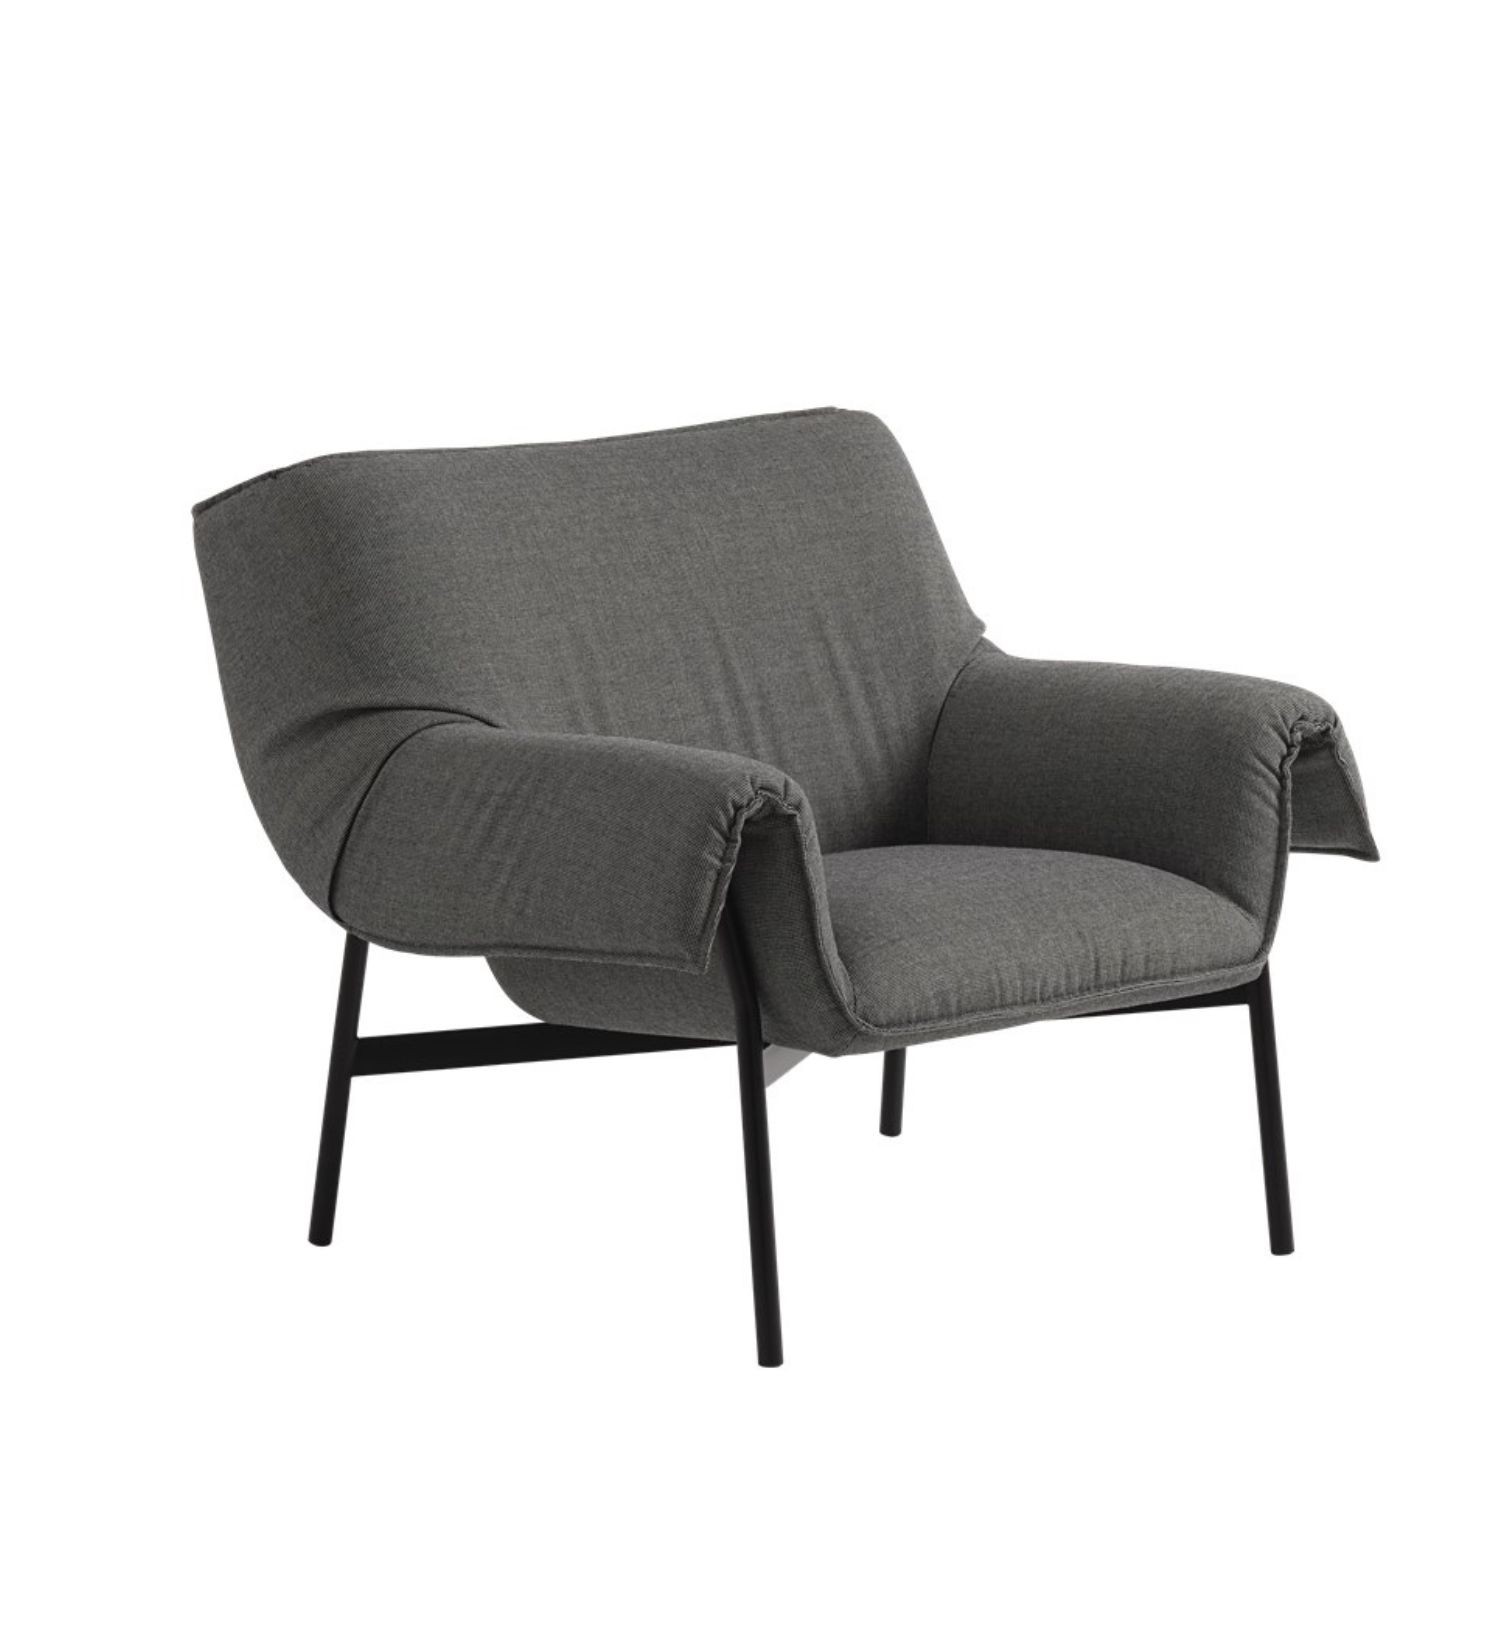 Wrap Lounge Chair od Muuto szara tapicerka czarne nogi